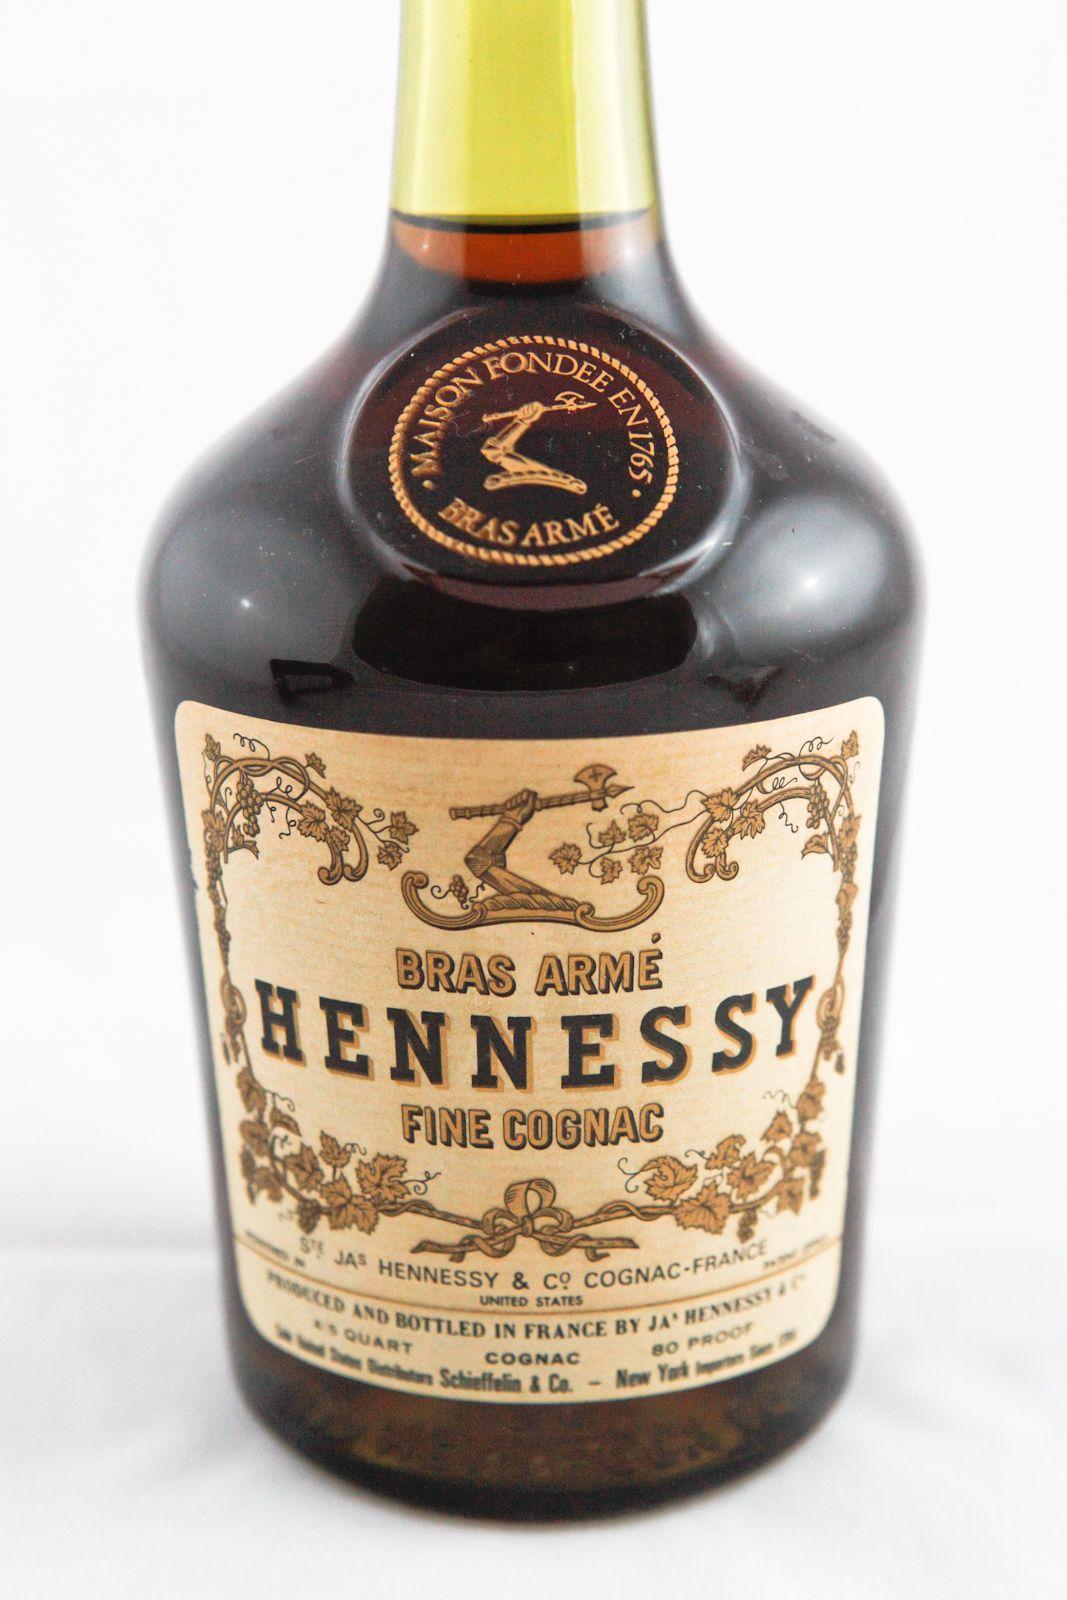 Hennessy Cognac Label Logo - Hennessy Bras Armé Fine Cognac to offer | Cognac Expert Blog